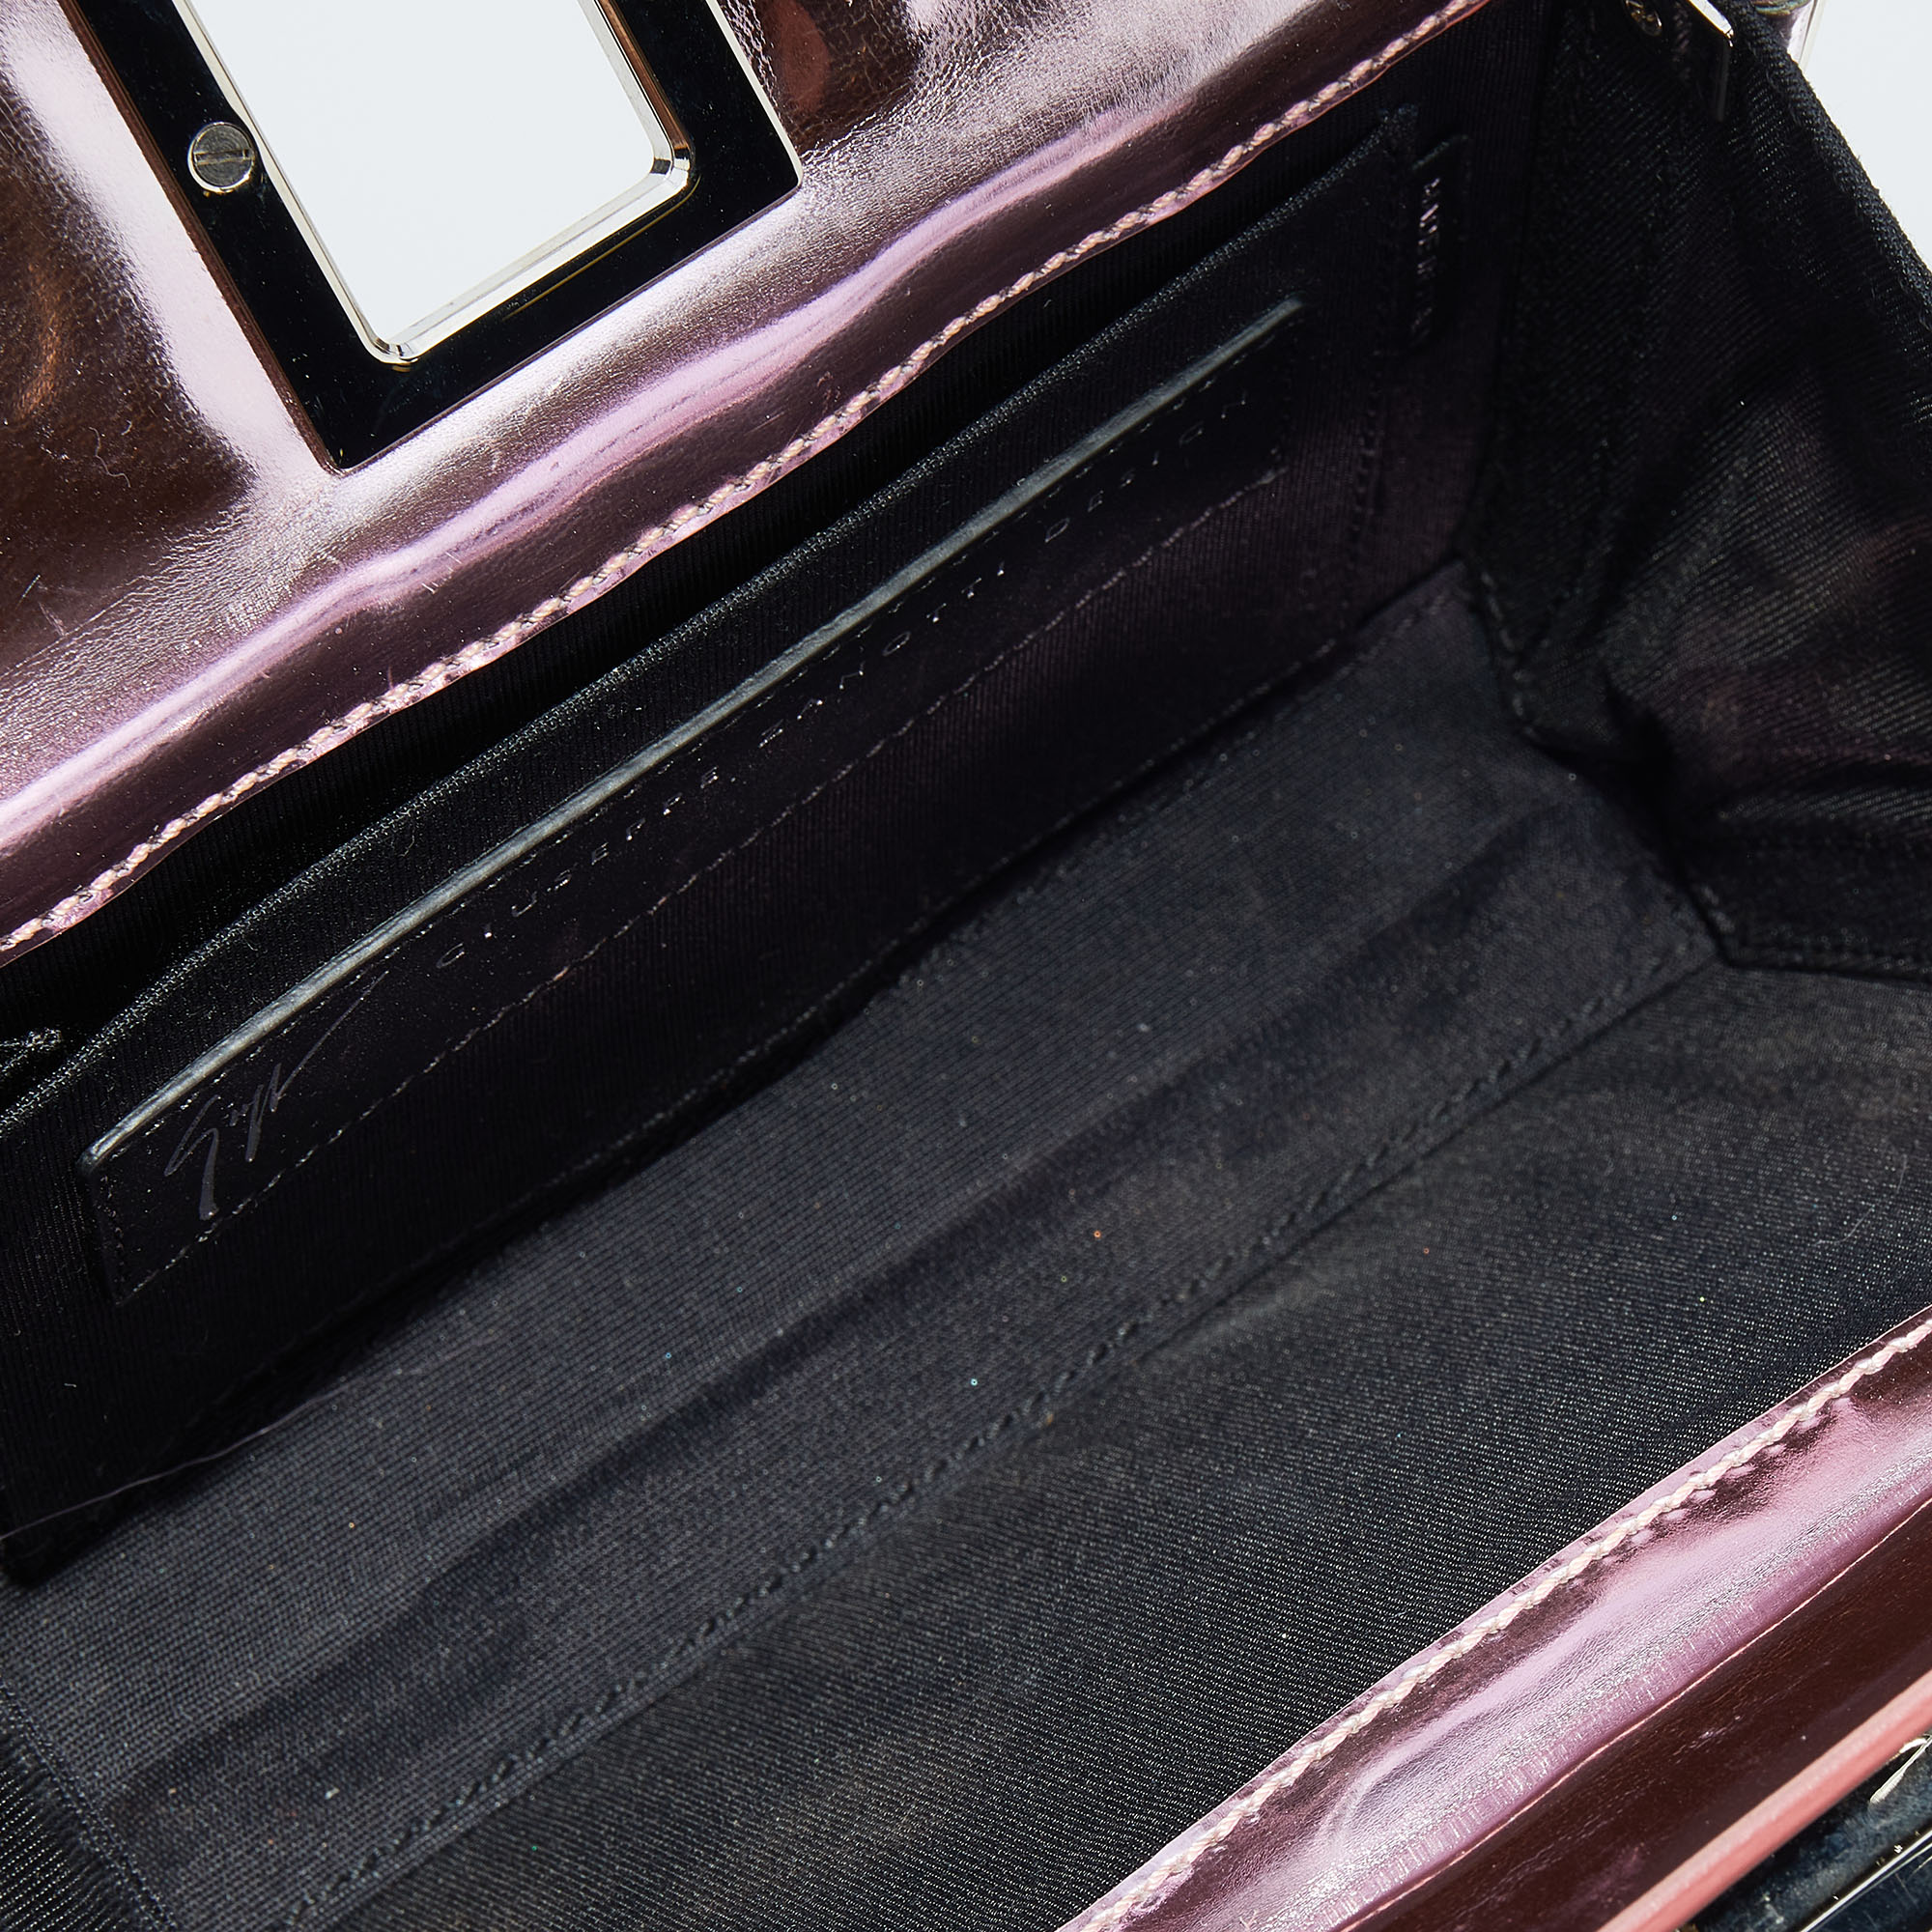 Giuseppe Zanotti Metallic Pink Patent Leather And Metal Box Crossbody Bag